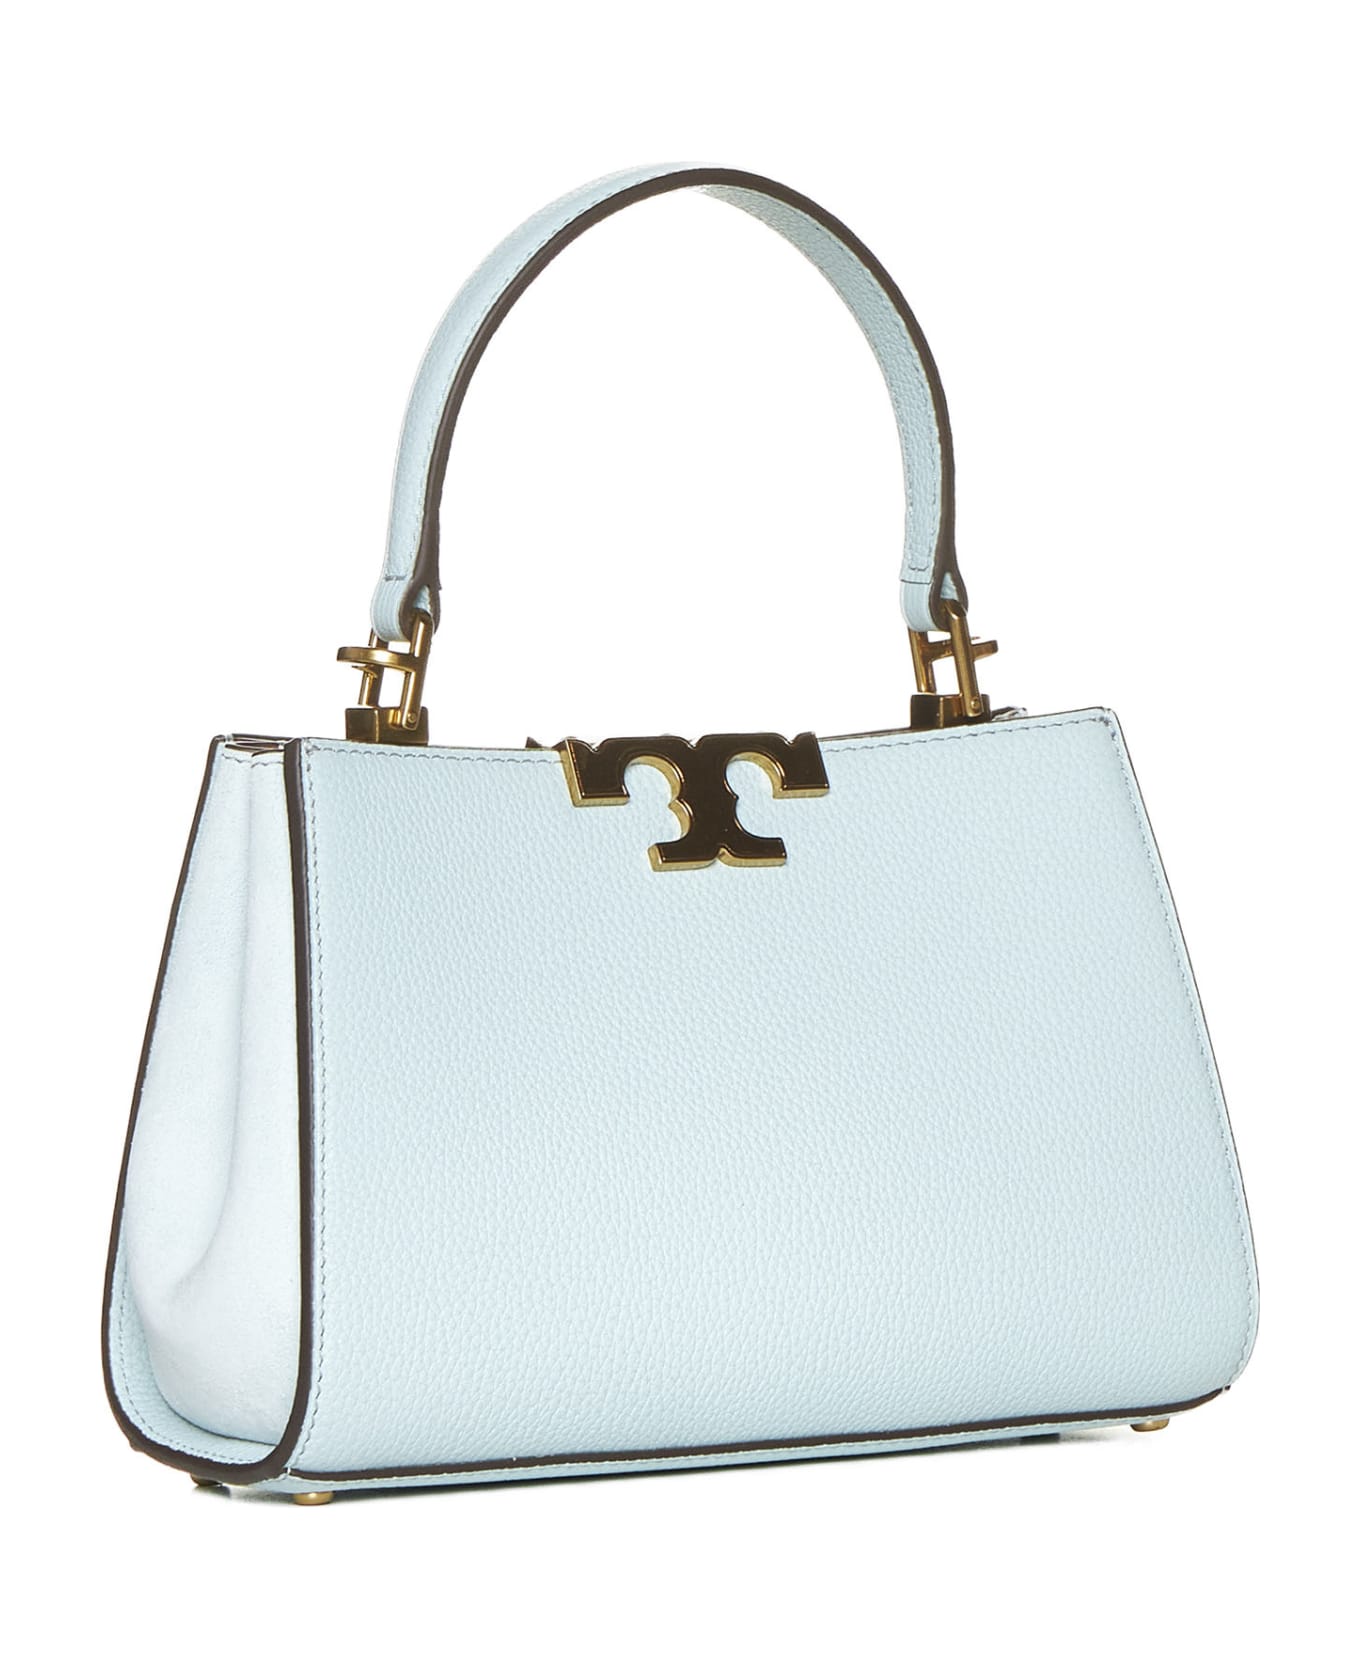 Tory Burch 'eleanor' Mini Bag In Light Blue Leather - Sky